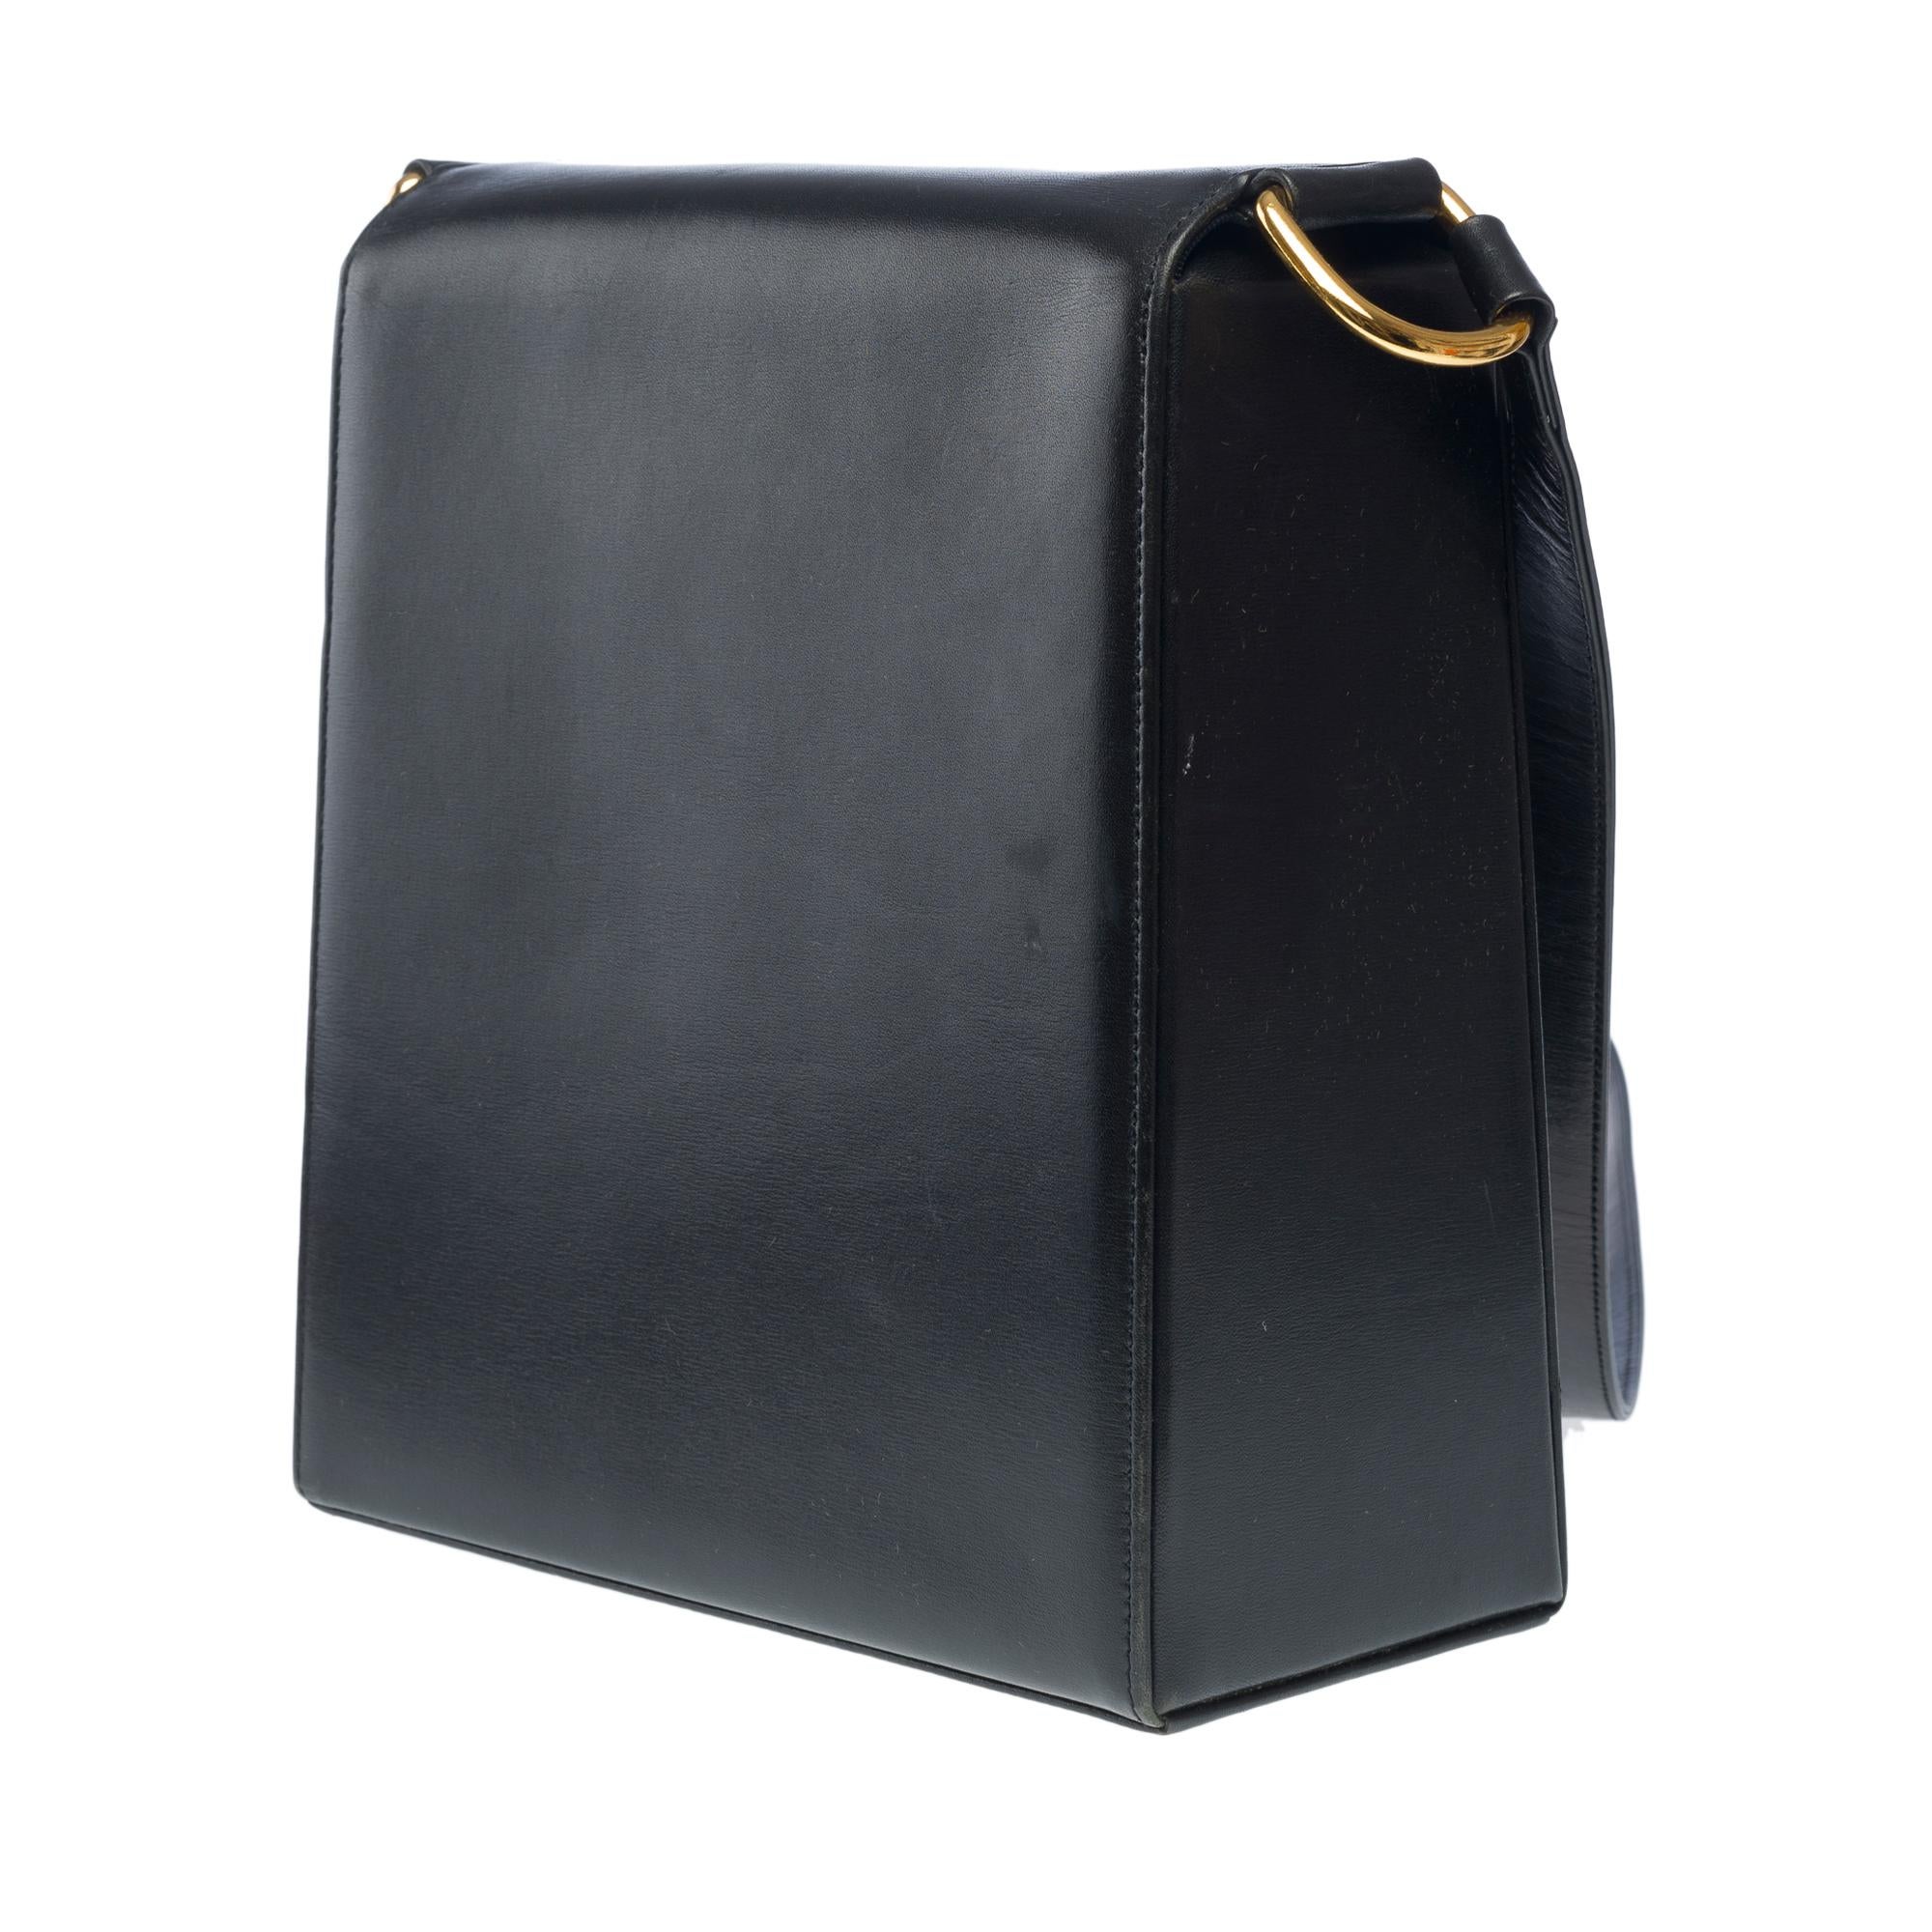 Lovely YSL vintage Messenger bag in black box calf leather, GHW For Sale 2